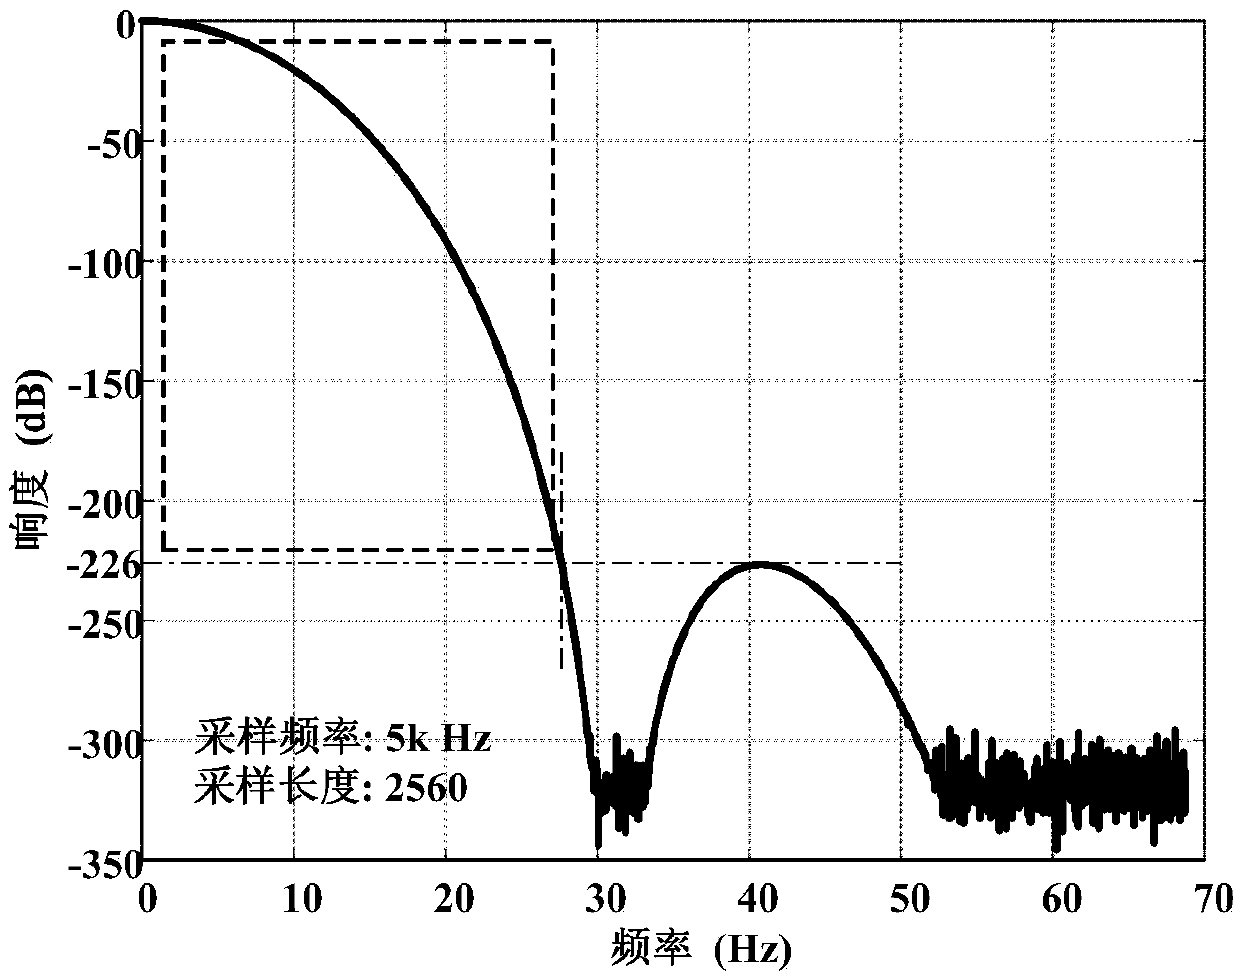 Inter-harmonic detection method based on triangular-rectangular hybrid convolution window and accelerated PSO algorithm